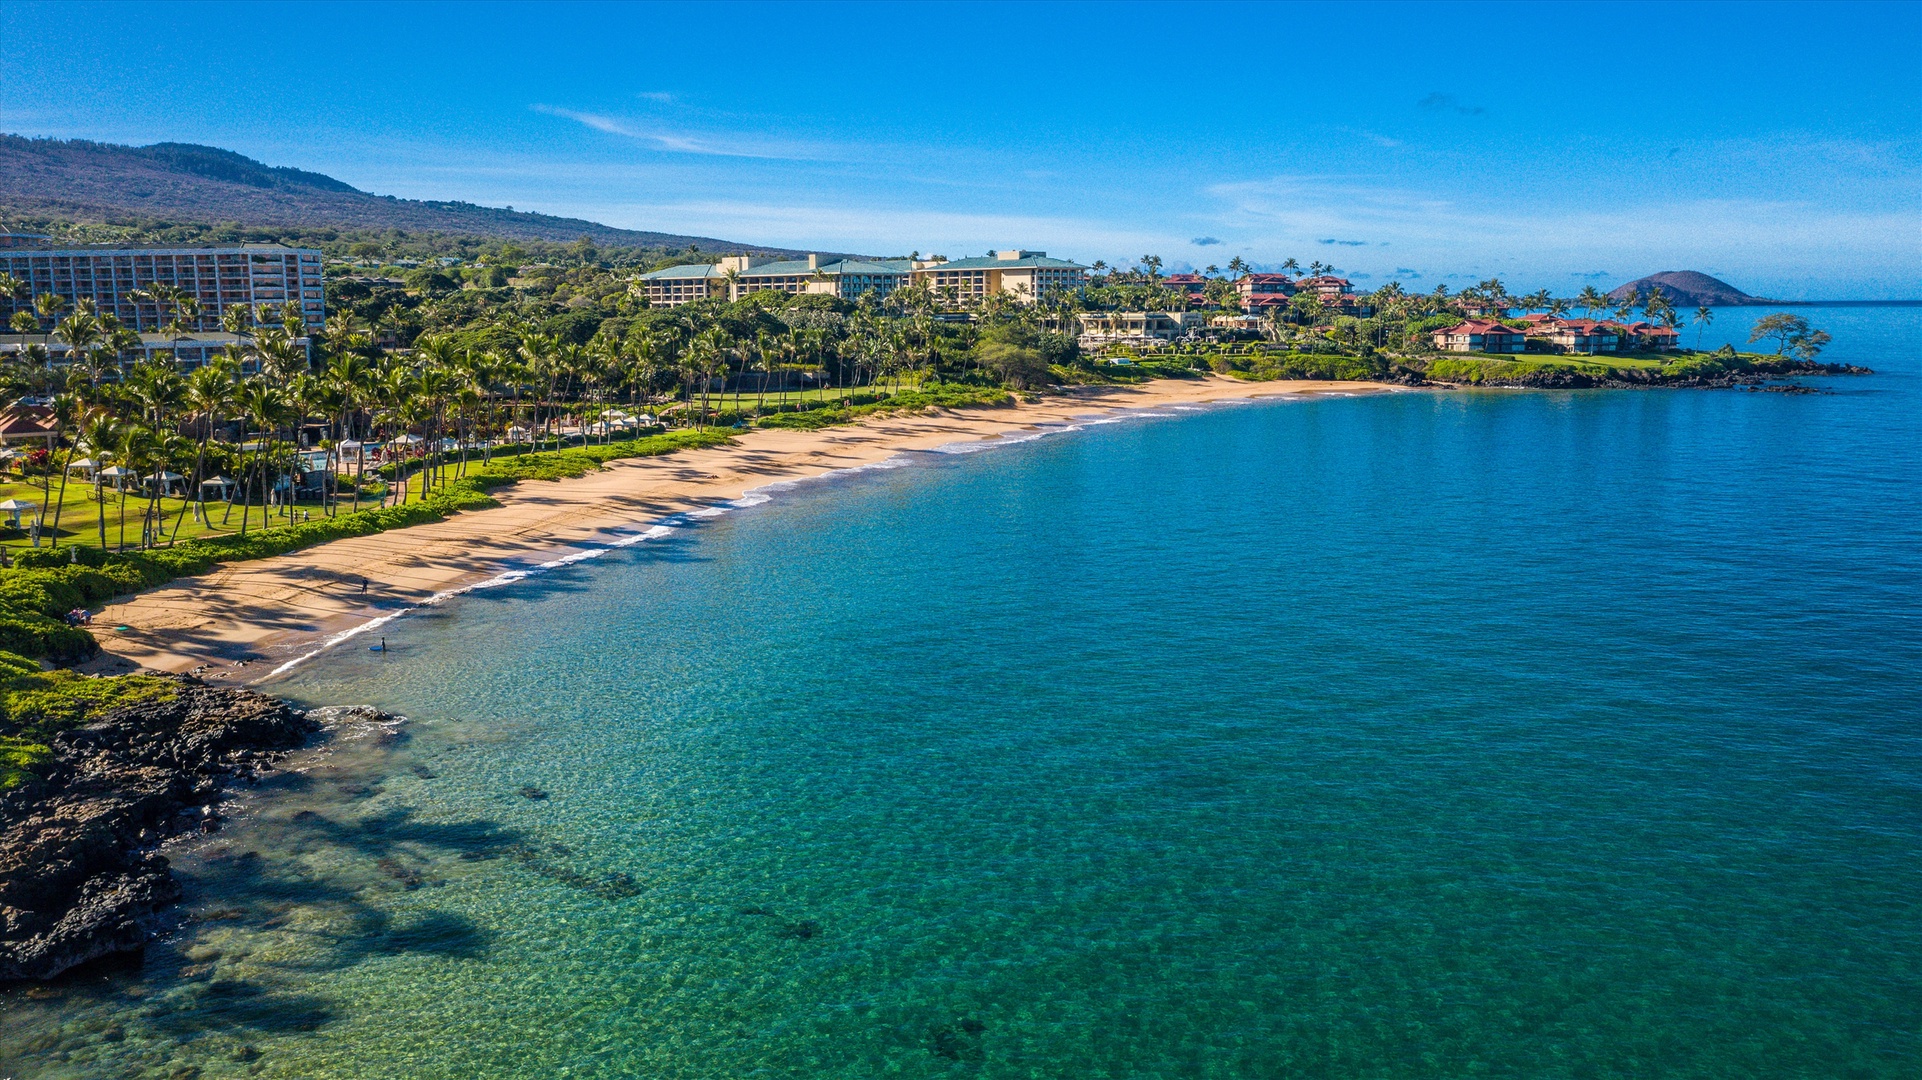 Wailea Vacation Rentals, The Beach Suite 803 at Andaz Maui Wailea Resort* - 